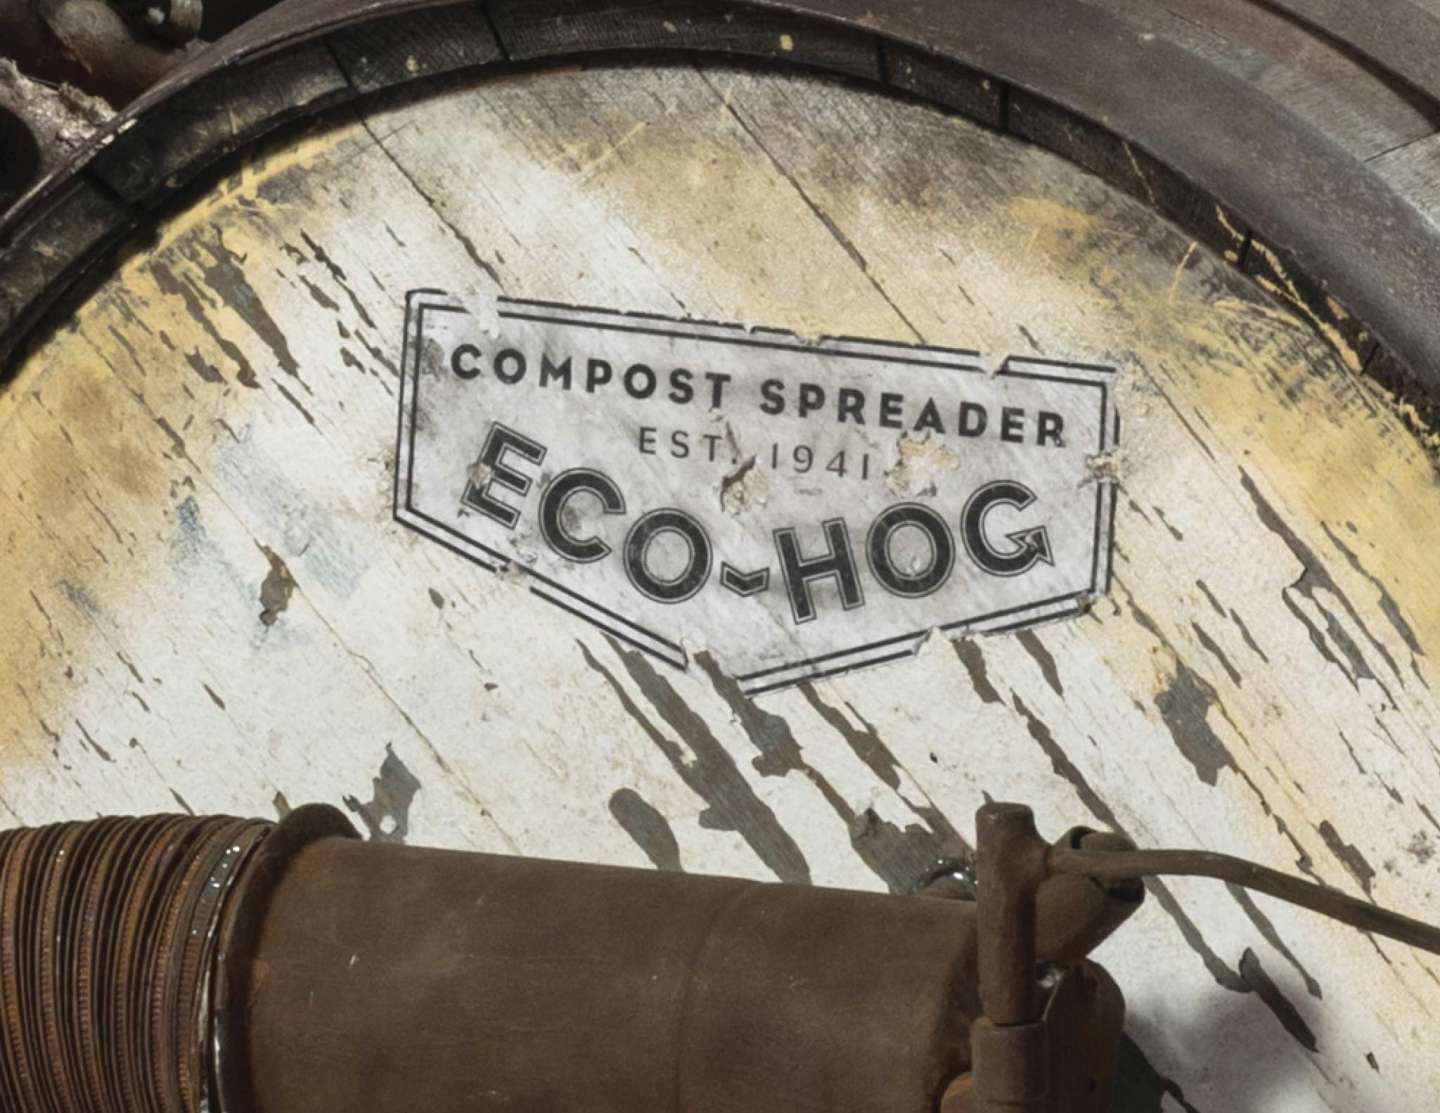 Eco-Hog: Help is on the Way!